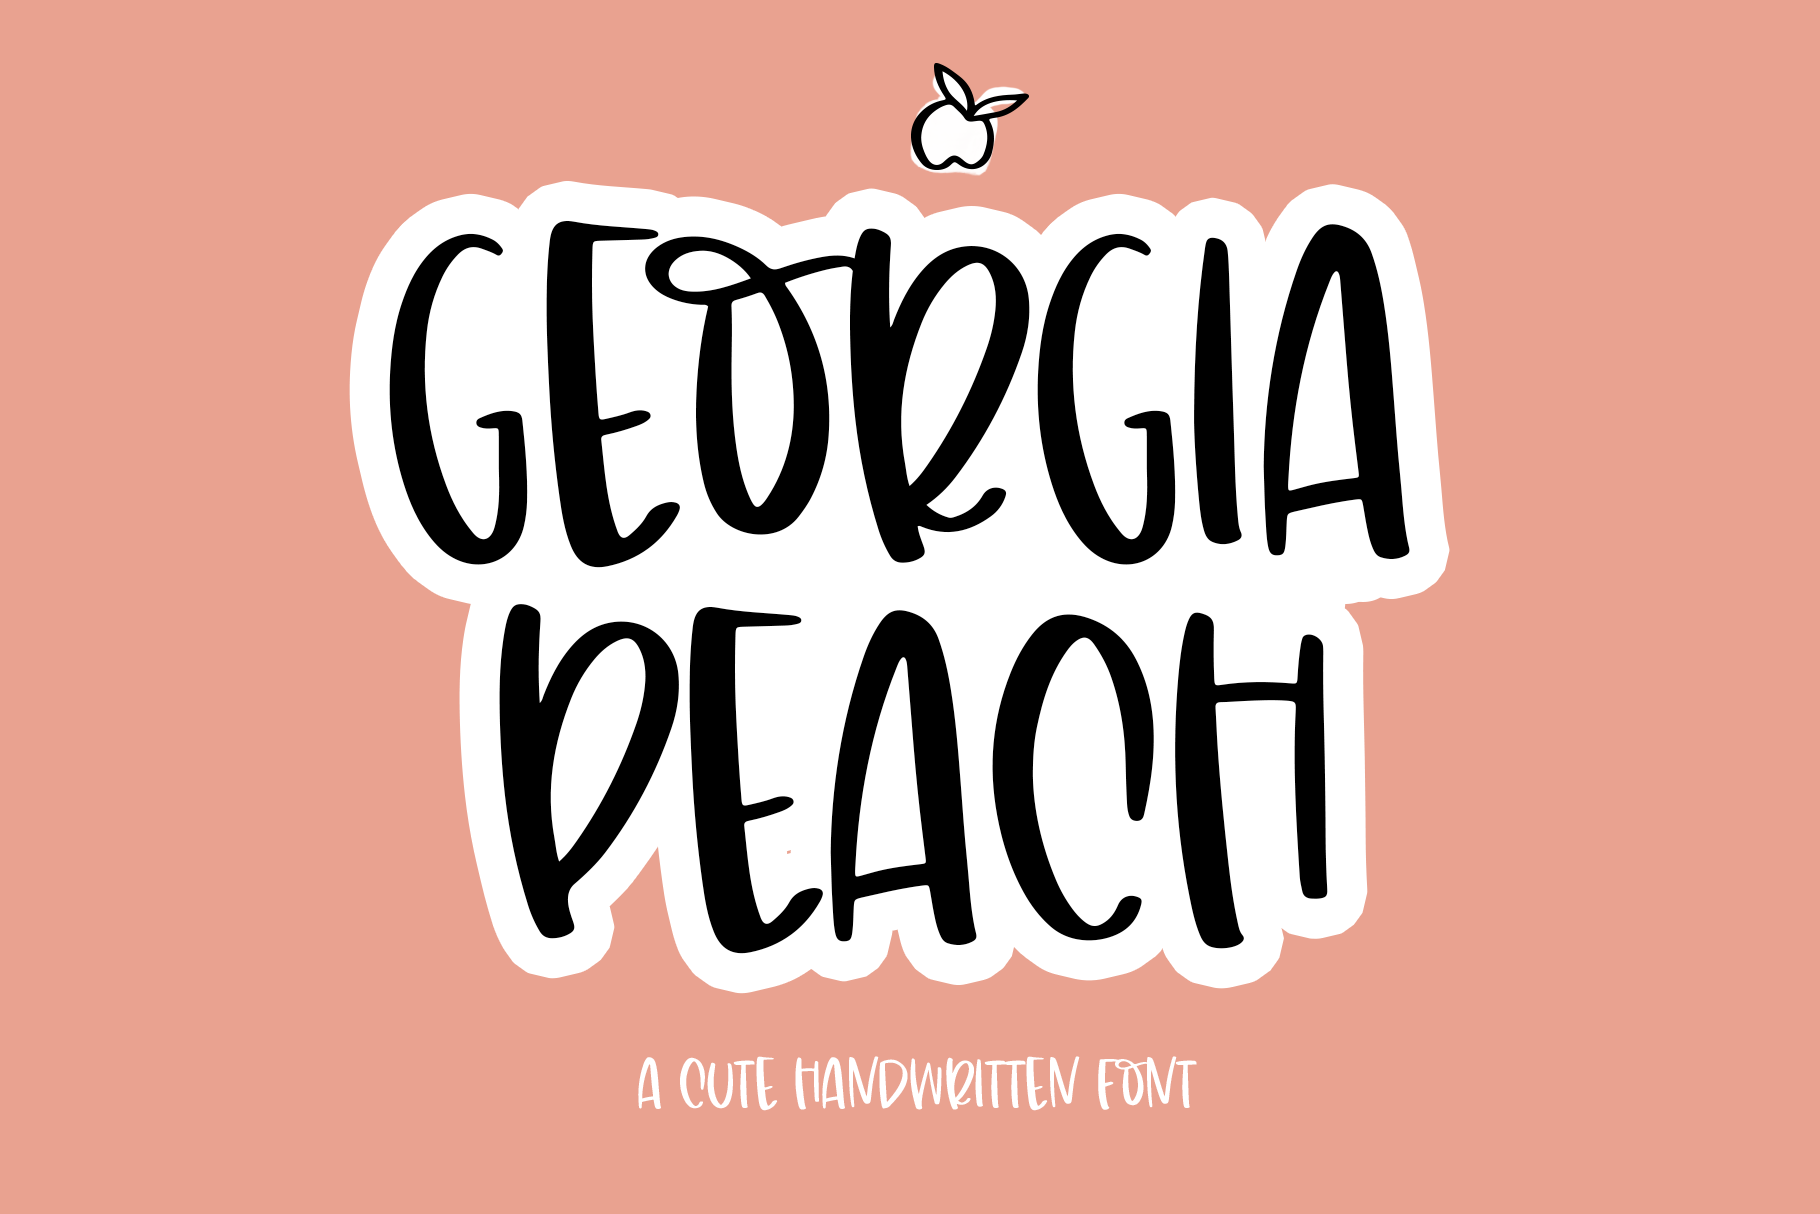 Georgia Peach Fun Handwritten Font By Ka Designs Thehungryjpeg Com